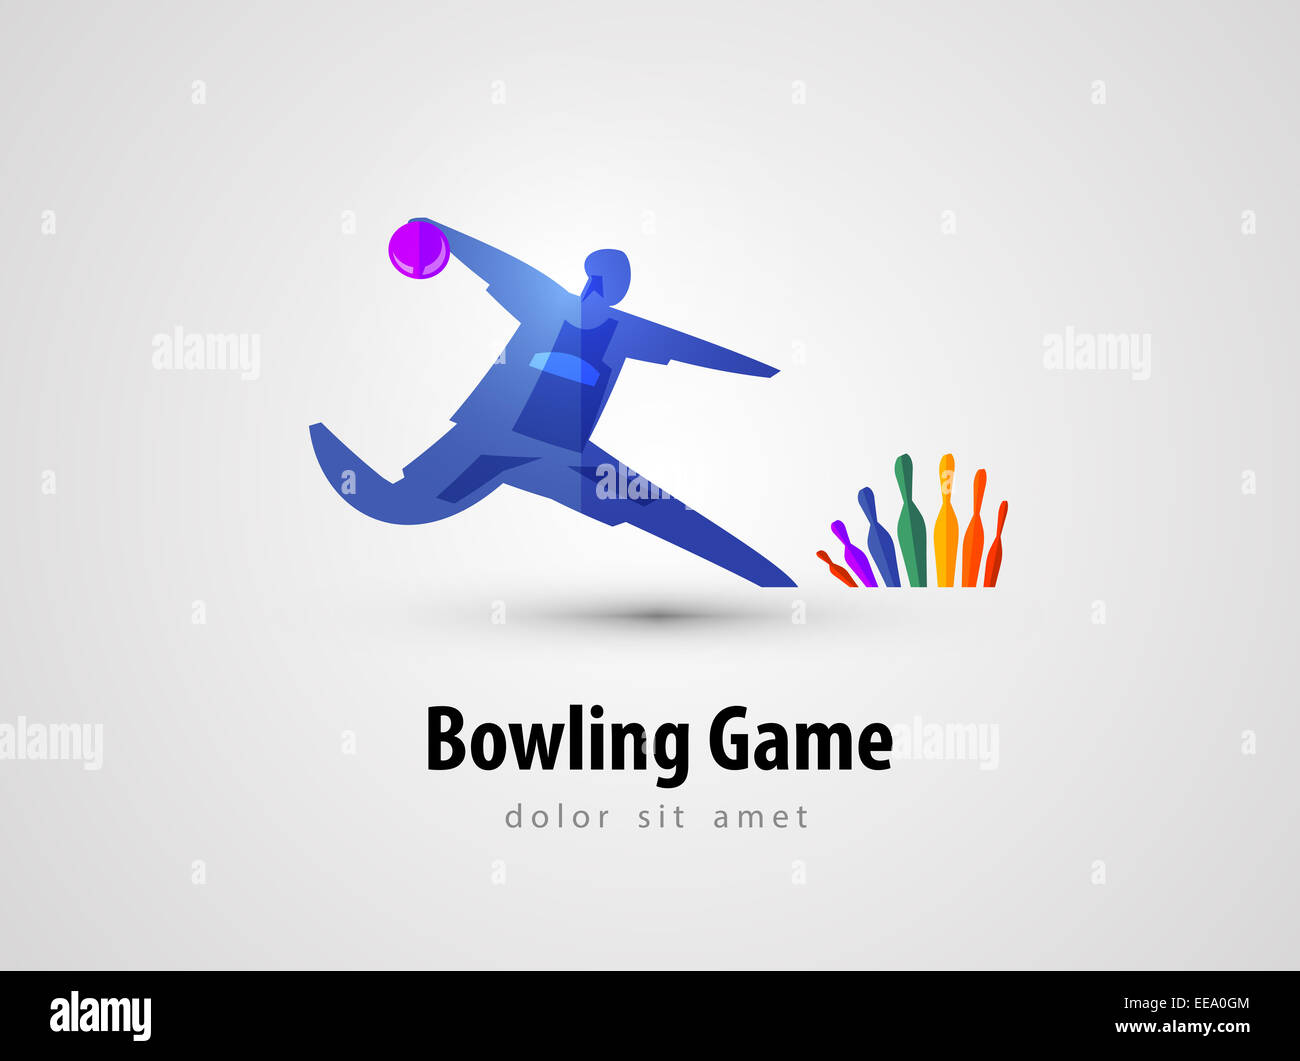 bowling vector logo design template. game or entertainment icon. Stock Photo